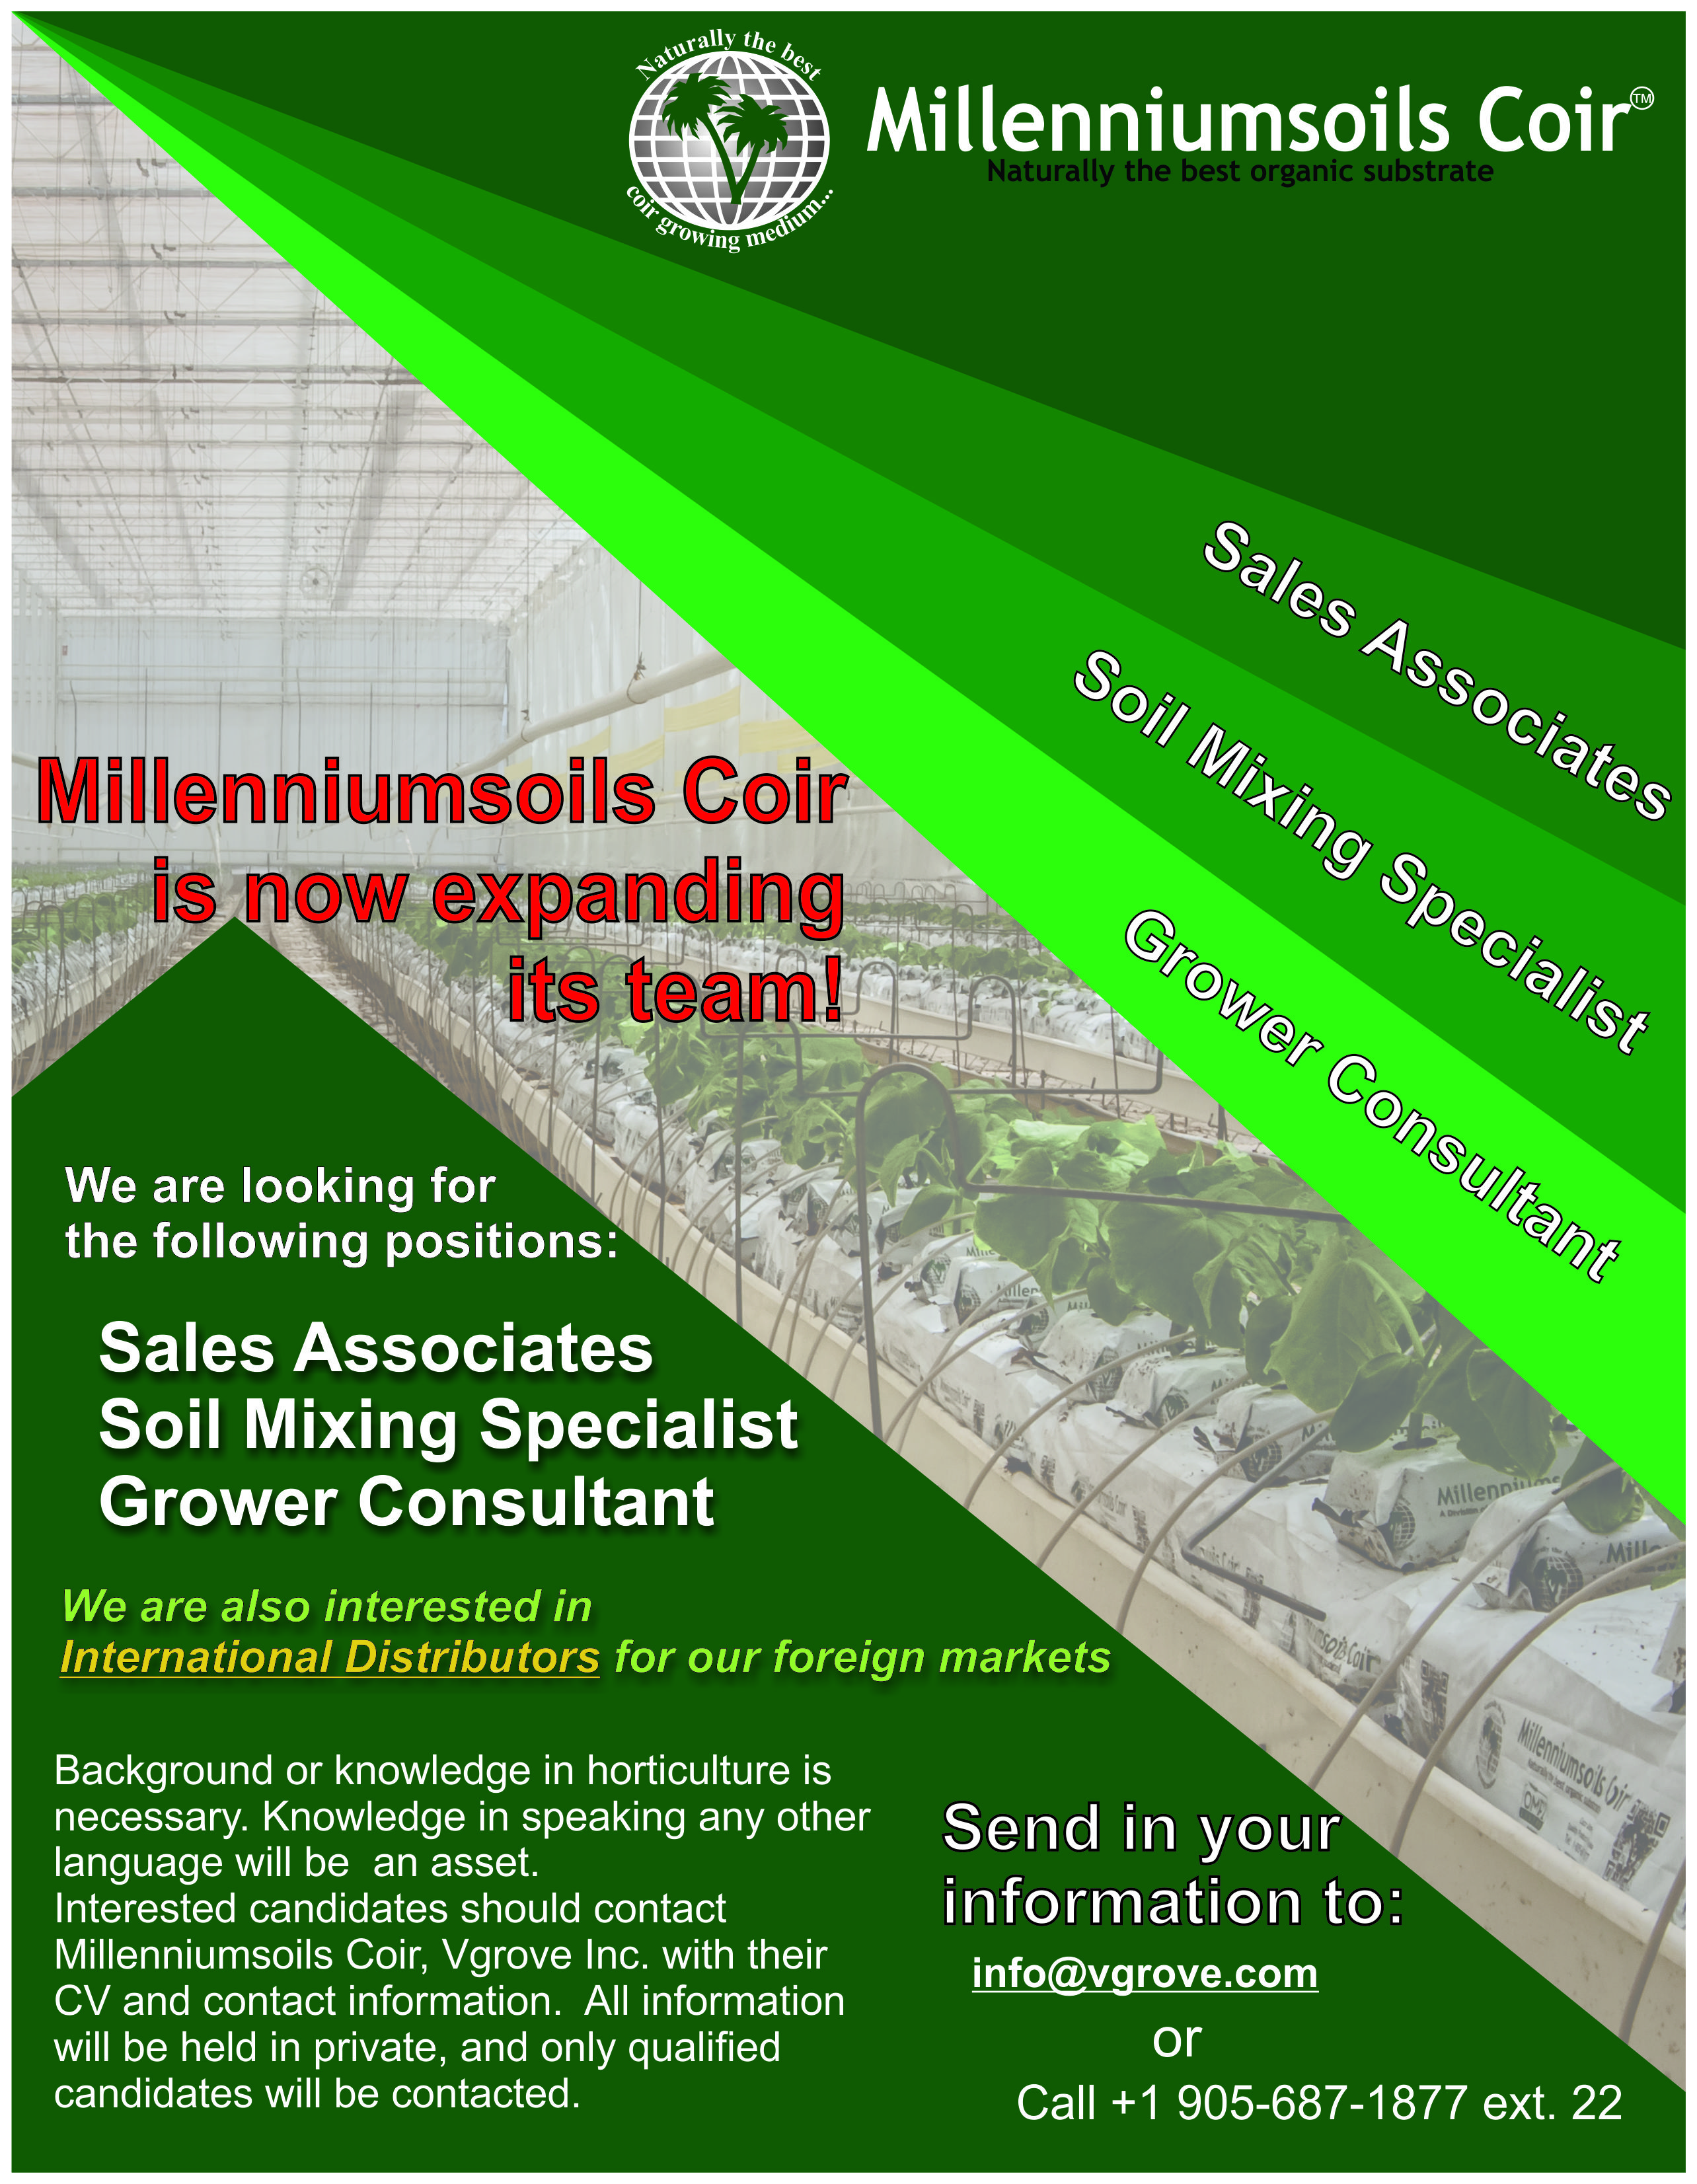 Millenniumsoils Coir is now expanding its team!